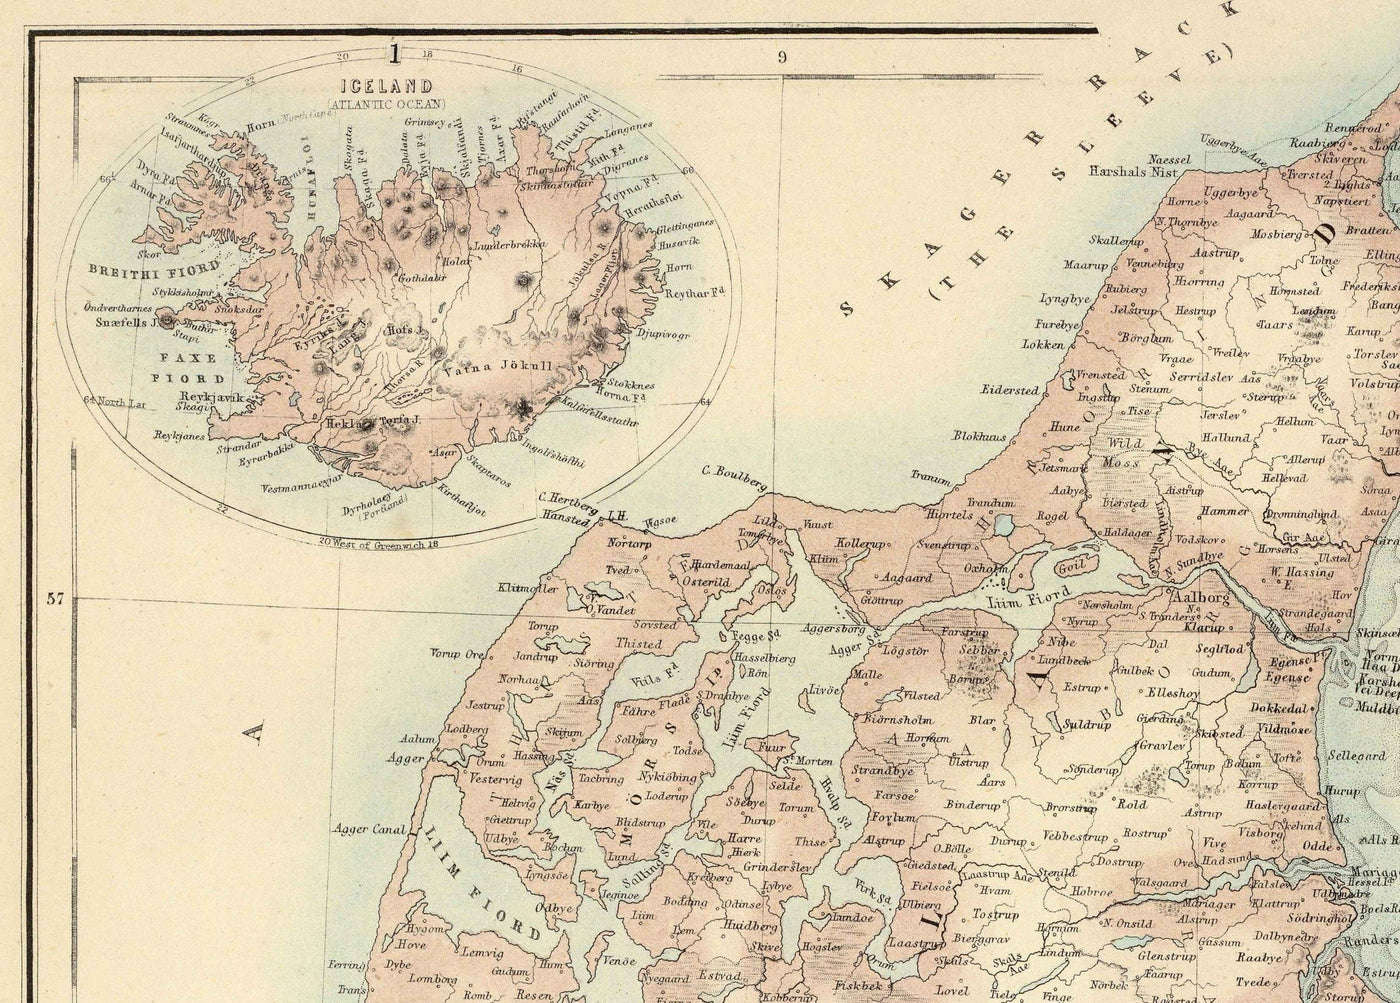 Ancienne carte du Danemark et du Schleswig-Holstein, 1872 par Fullarton - Islande, îles Féroé, Royaume danois, Zélande, Copenhague